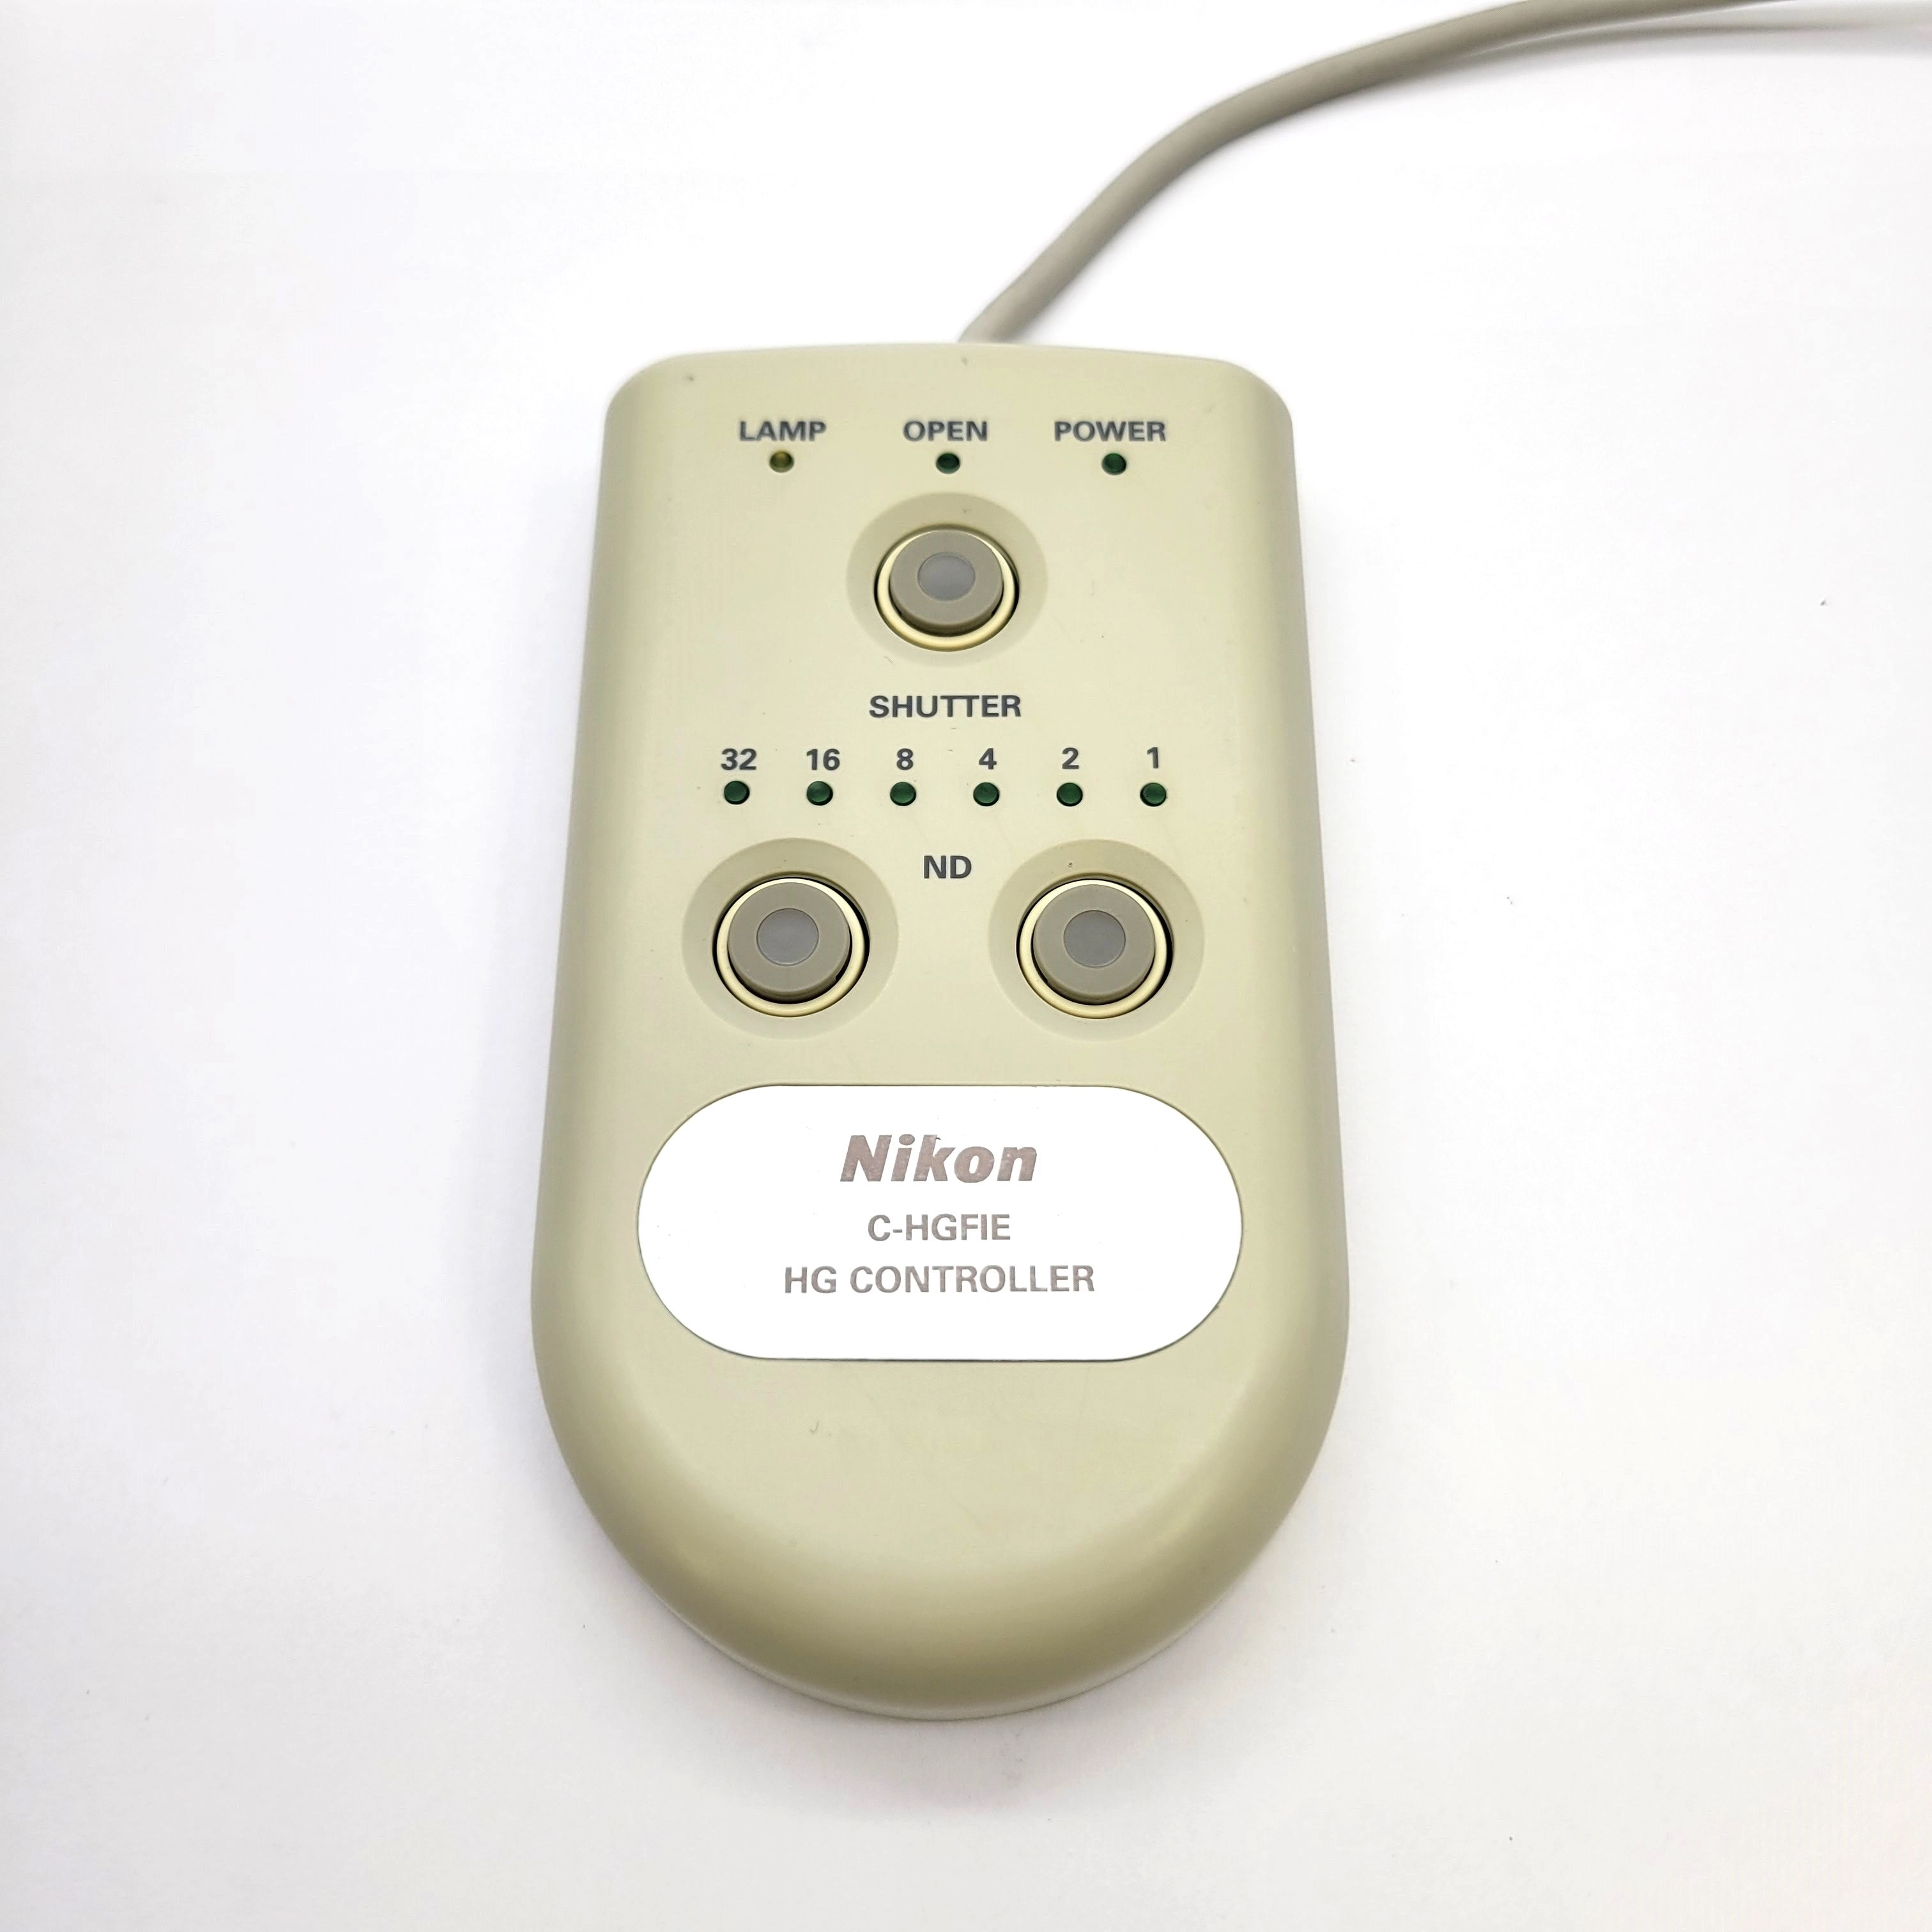 Nikon Microscope Intensilight C-HGFIE HG Lamp Controller